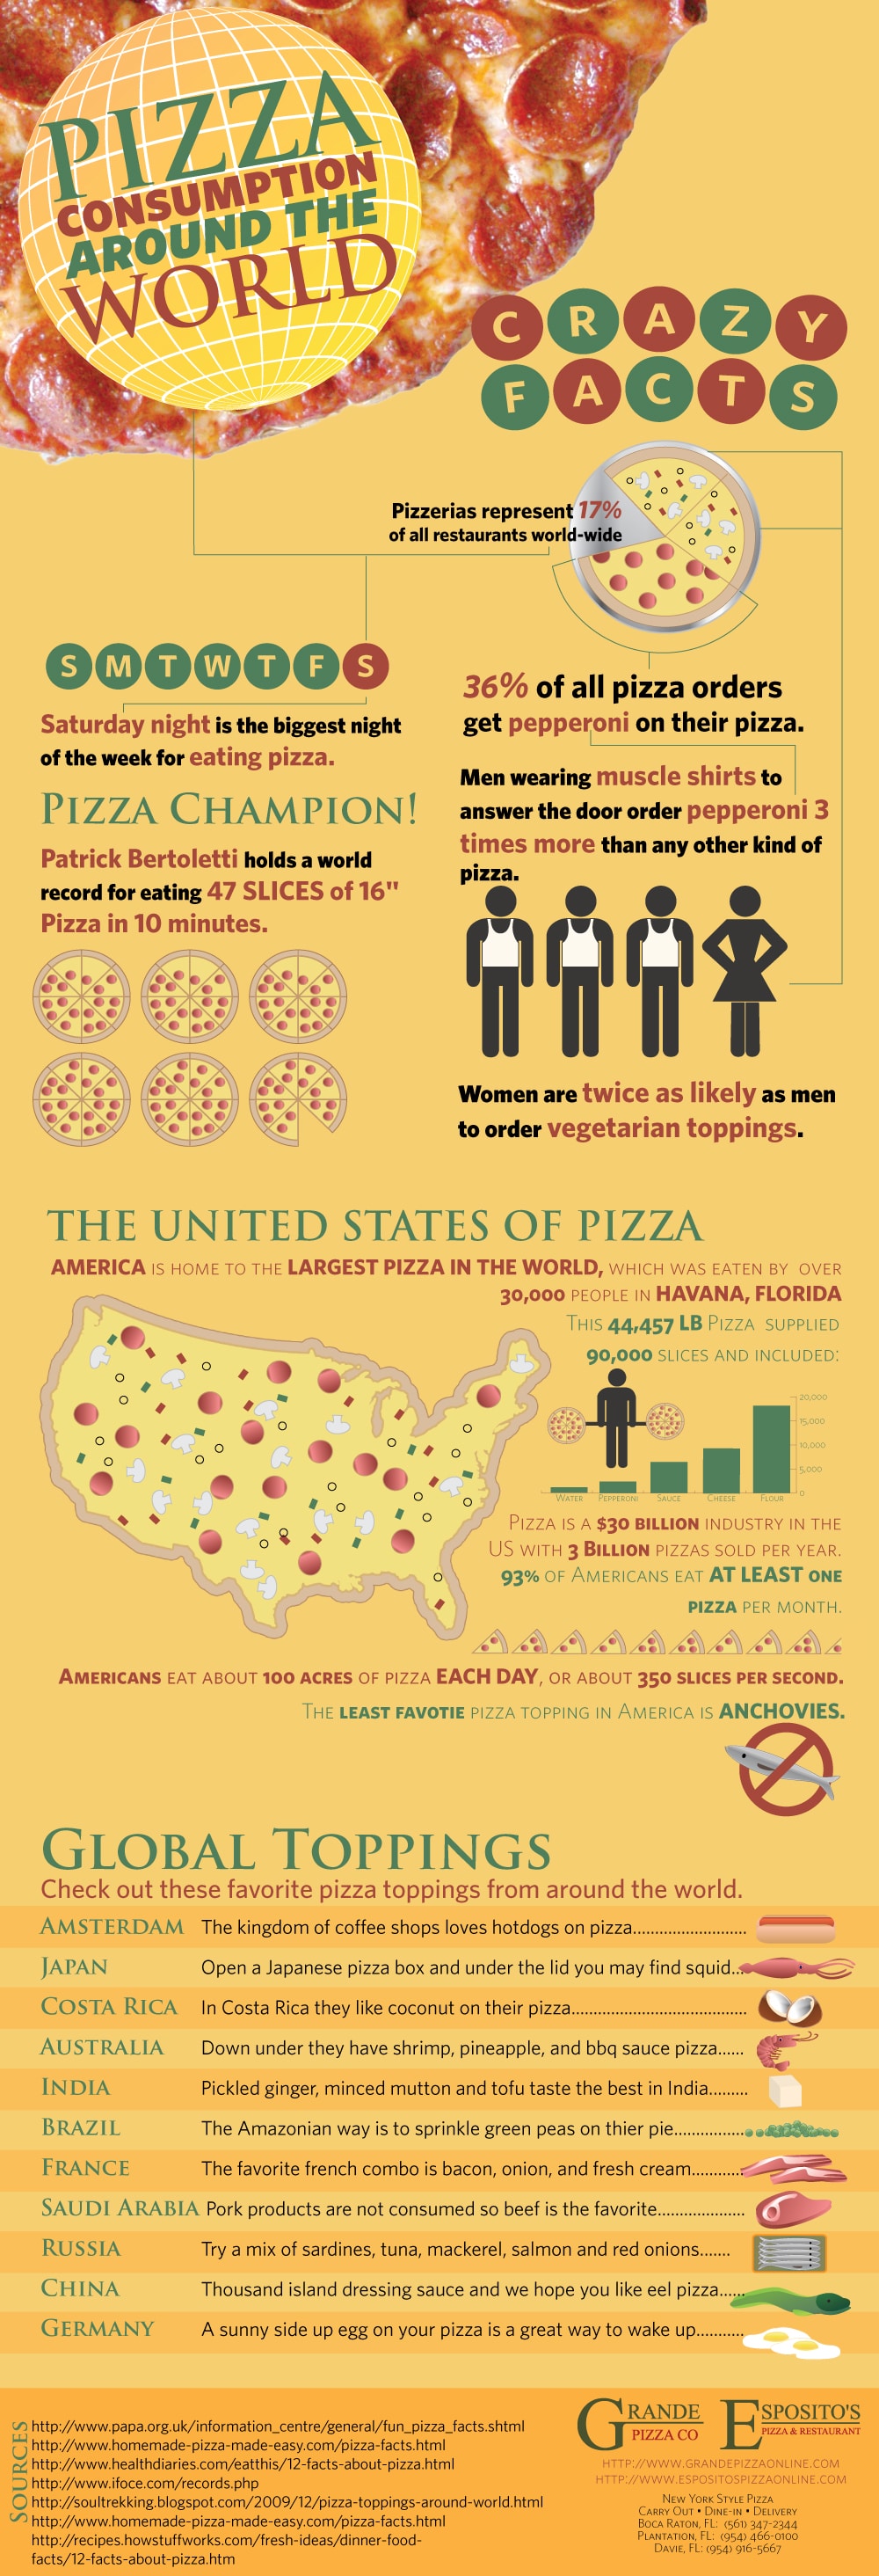 Pizza Around The World: The Amazing Statistics [Infographic]